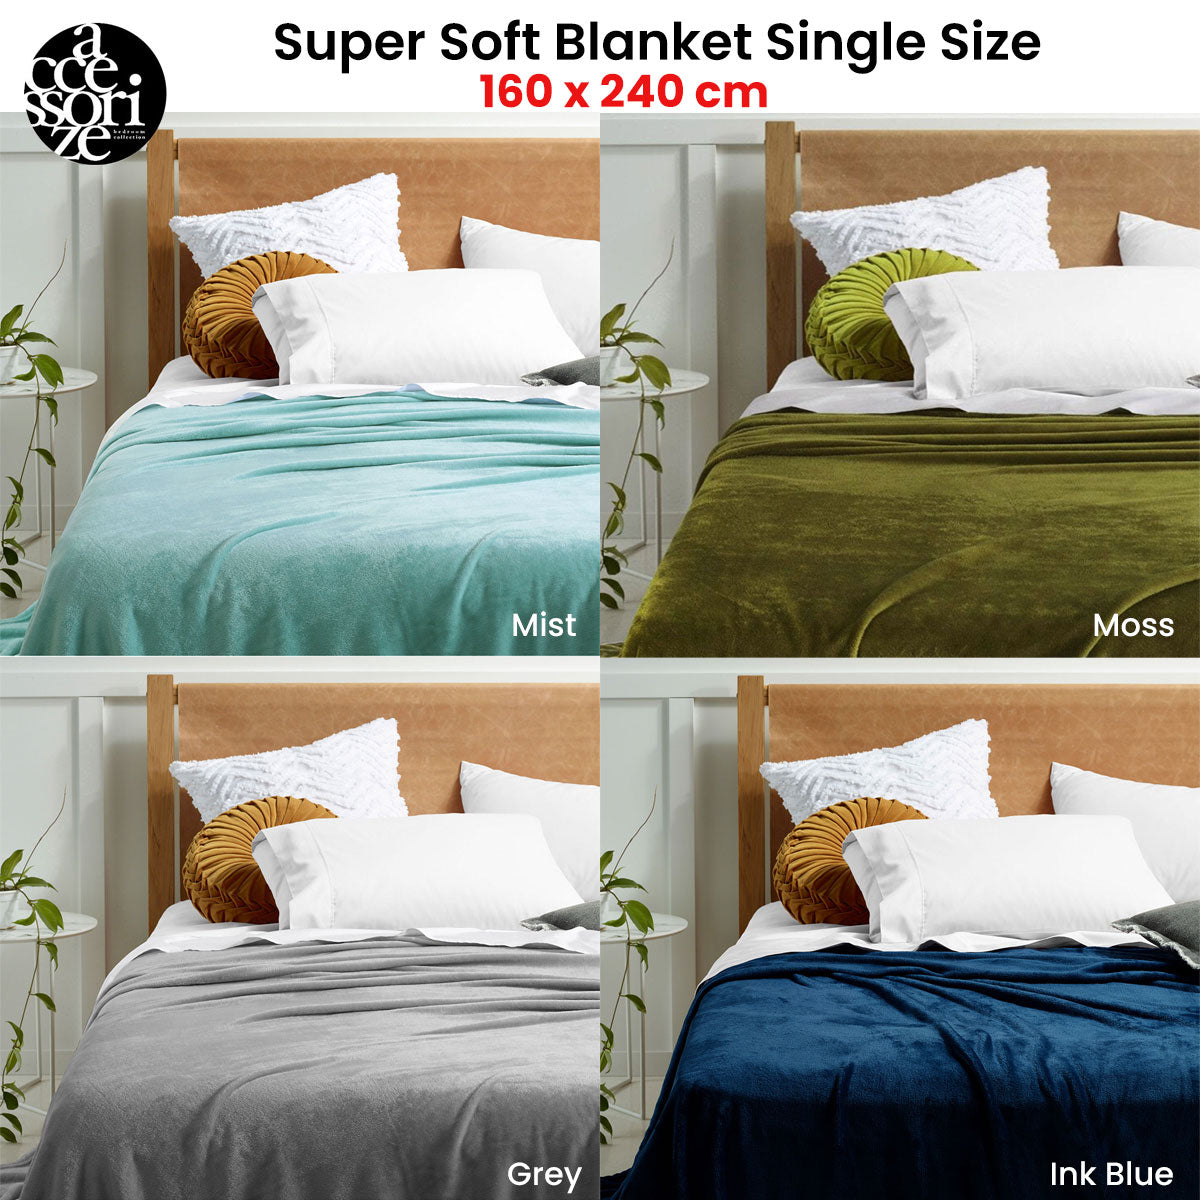 Wallis Throw Soft Blanket Accessorize Super Soft Blanket Single Size 160 x 240cm - Ink Blue